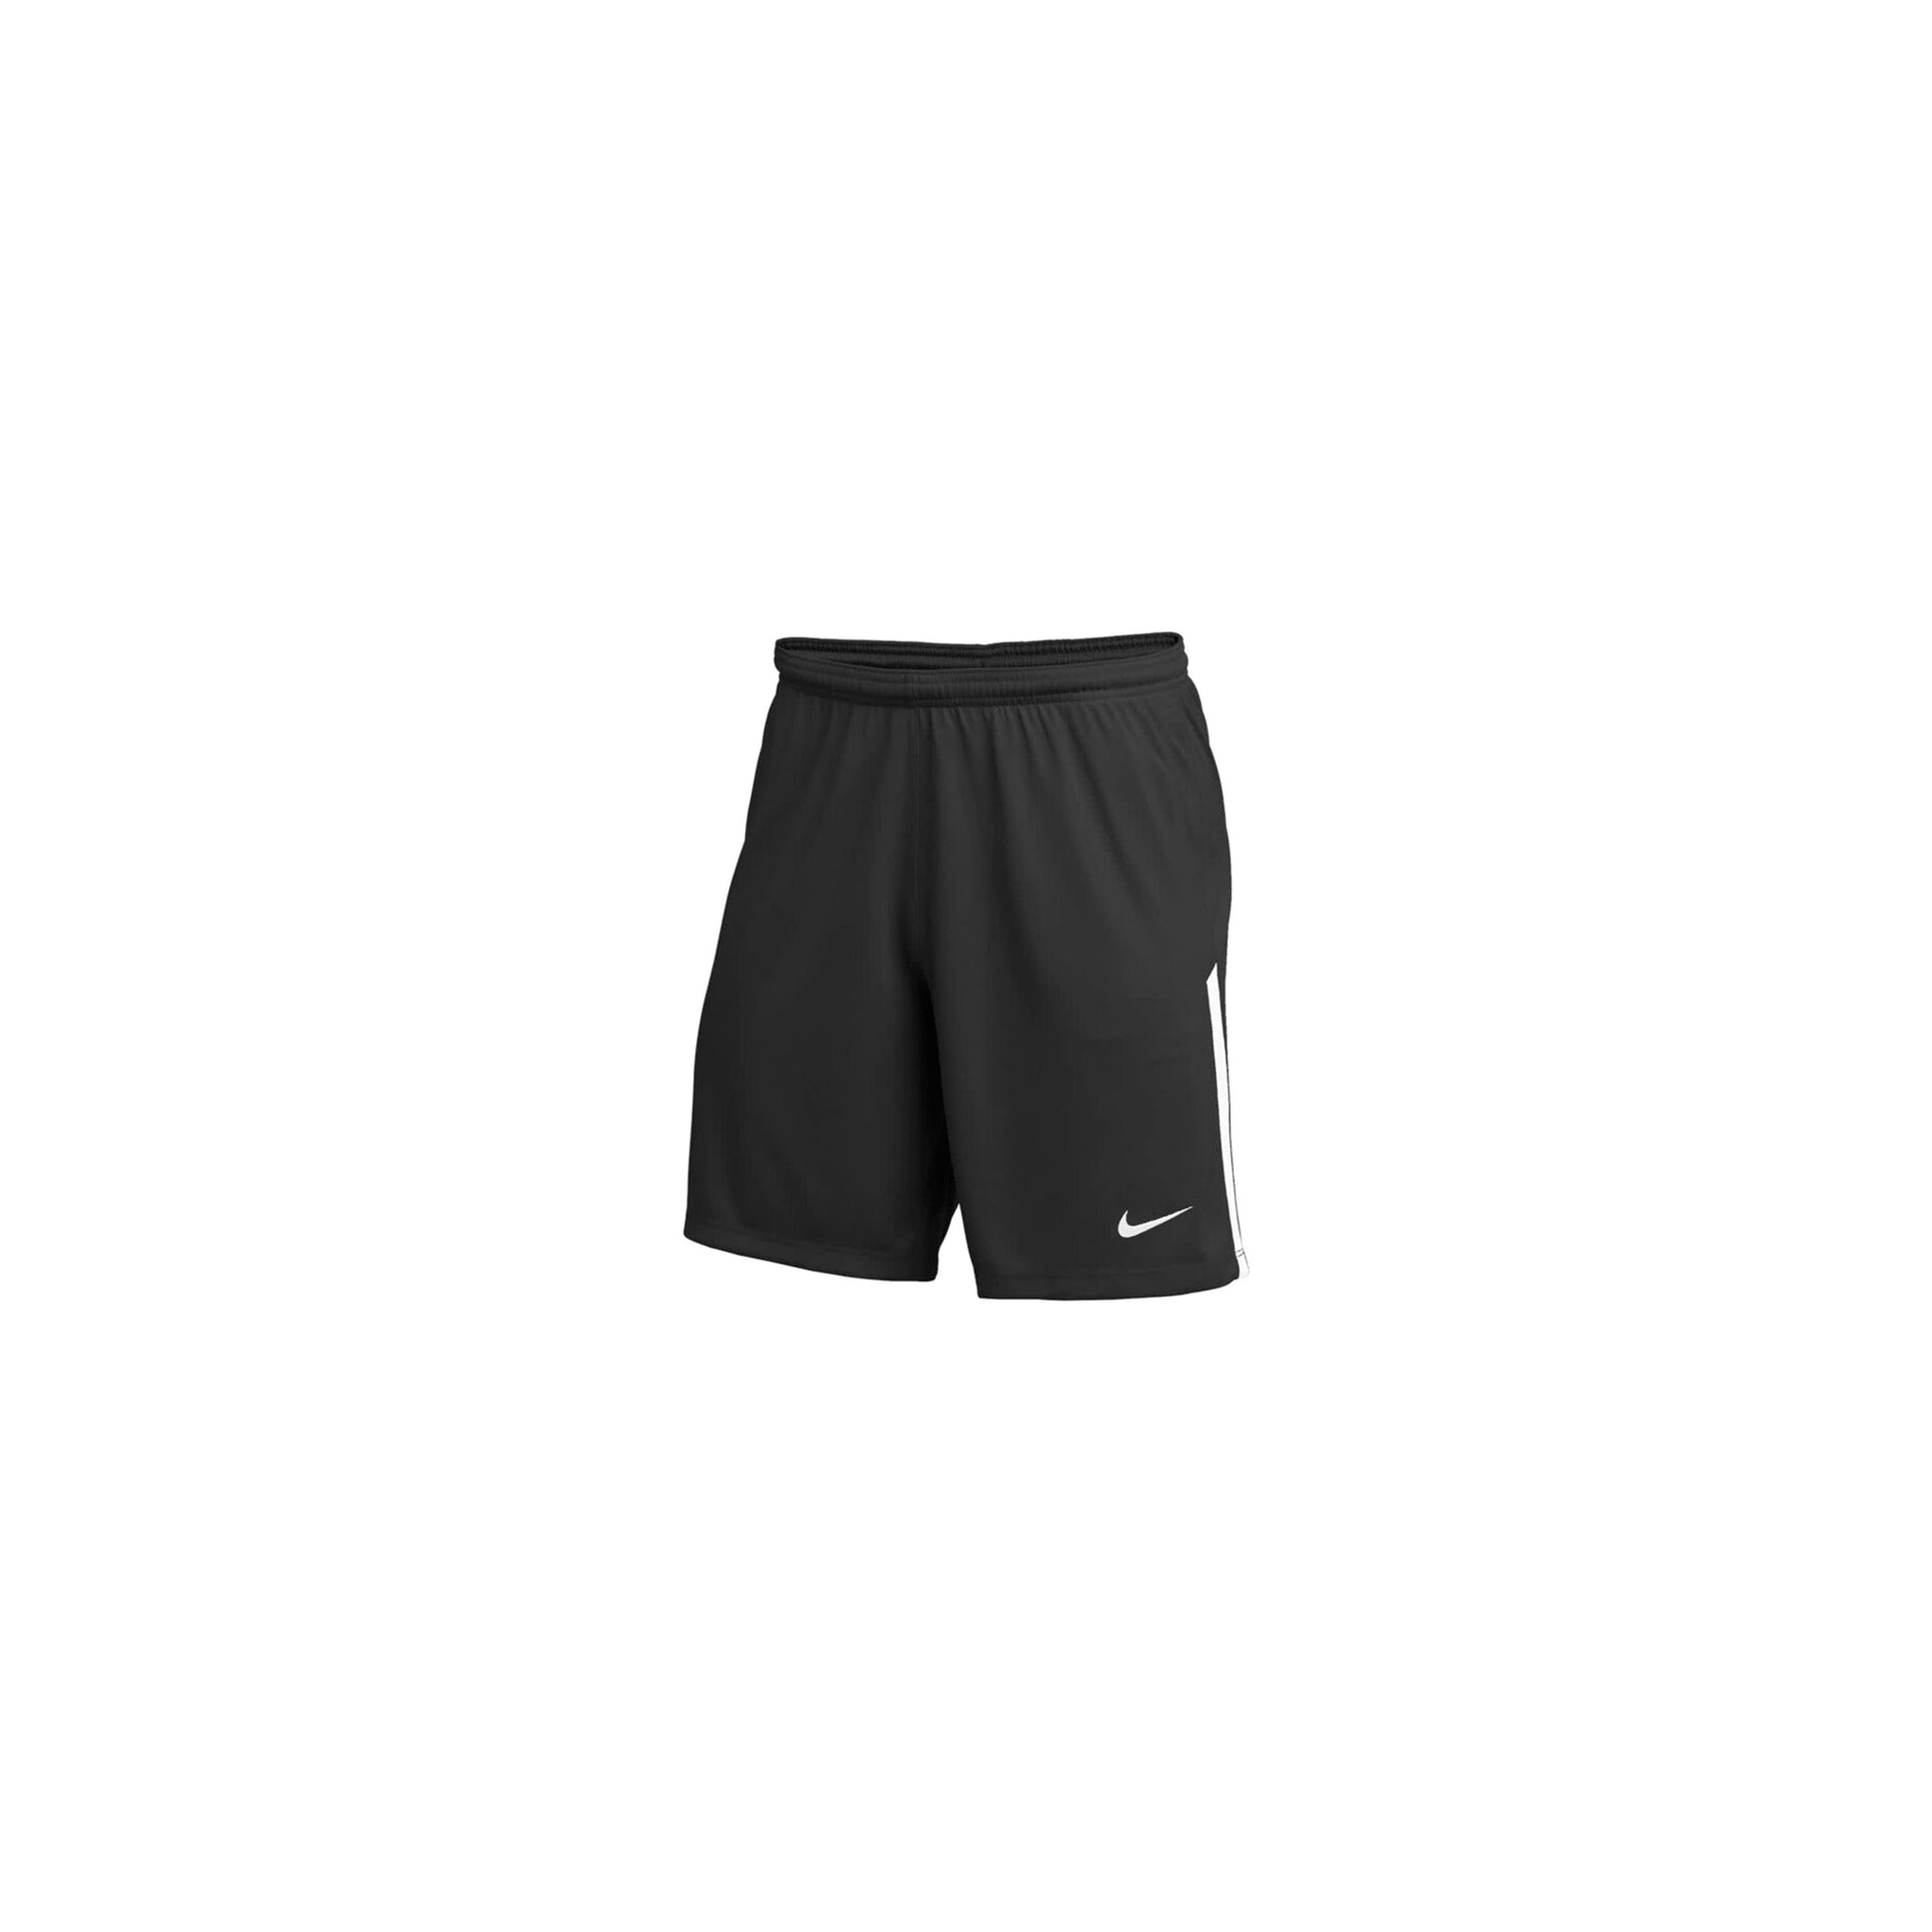 NIKE Dry League Knit II (W) Shorts